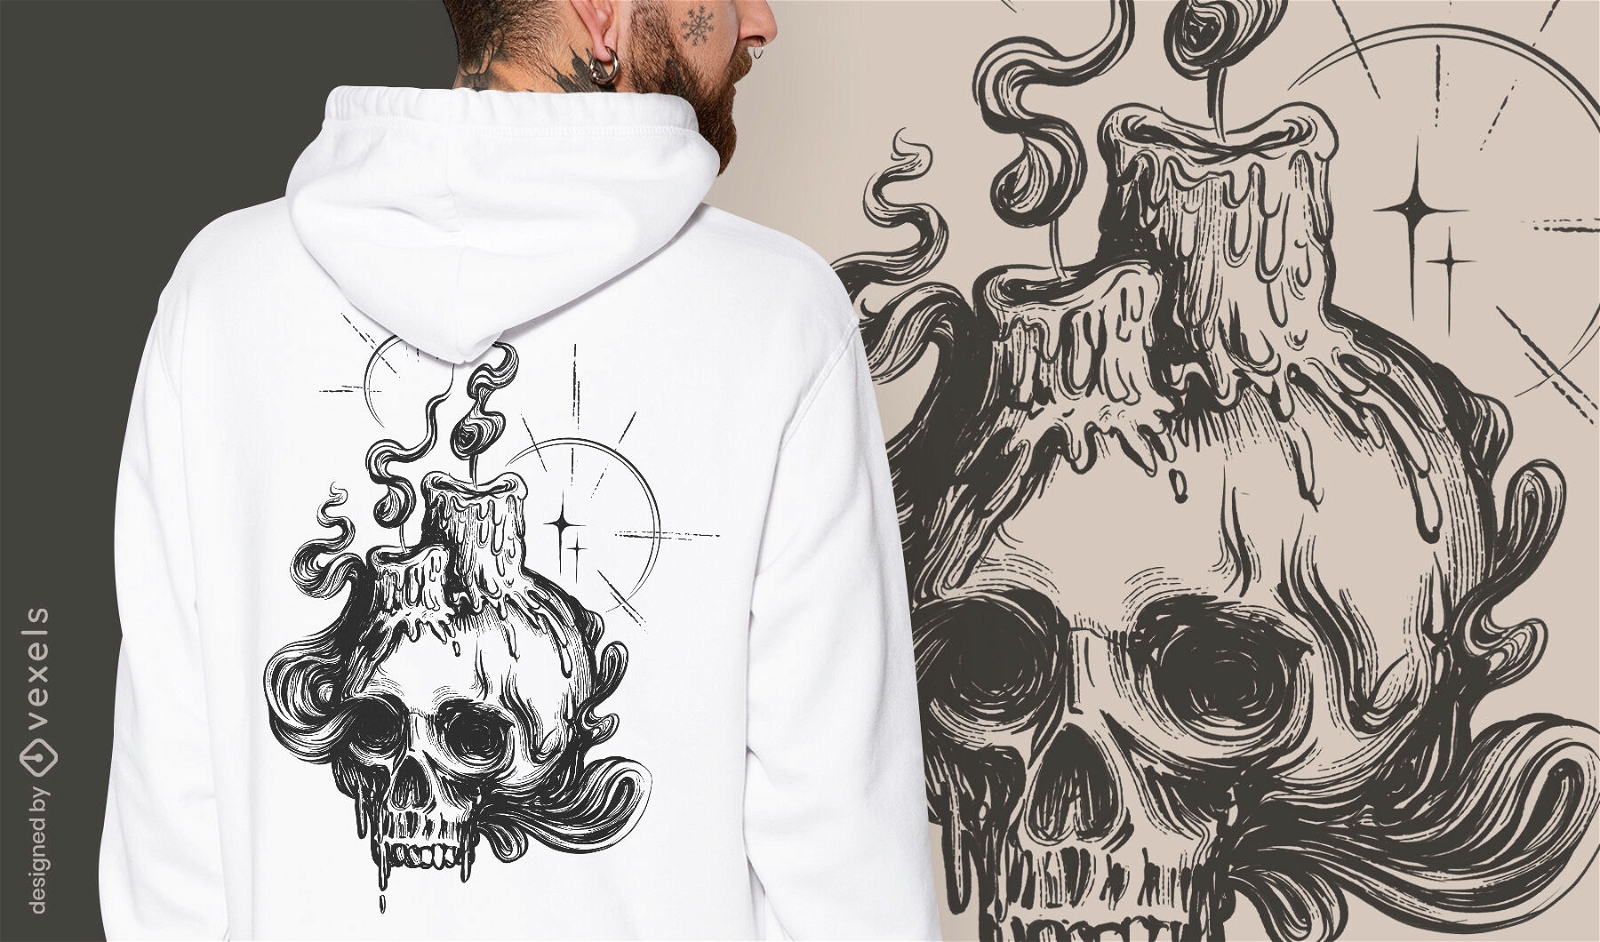 Dark skull and candles t-shirt design